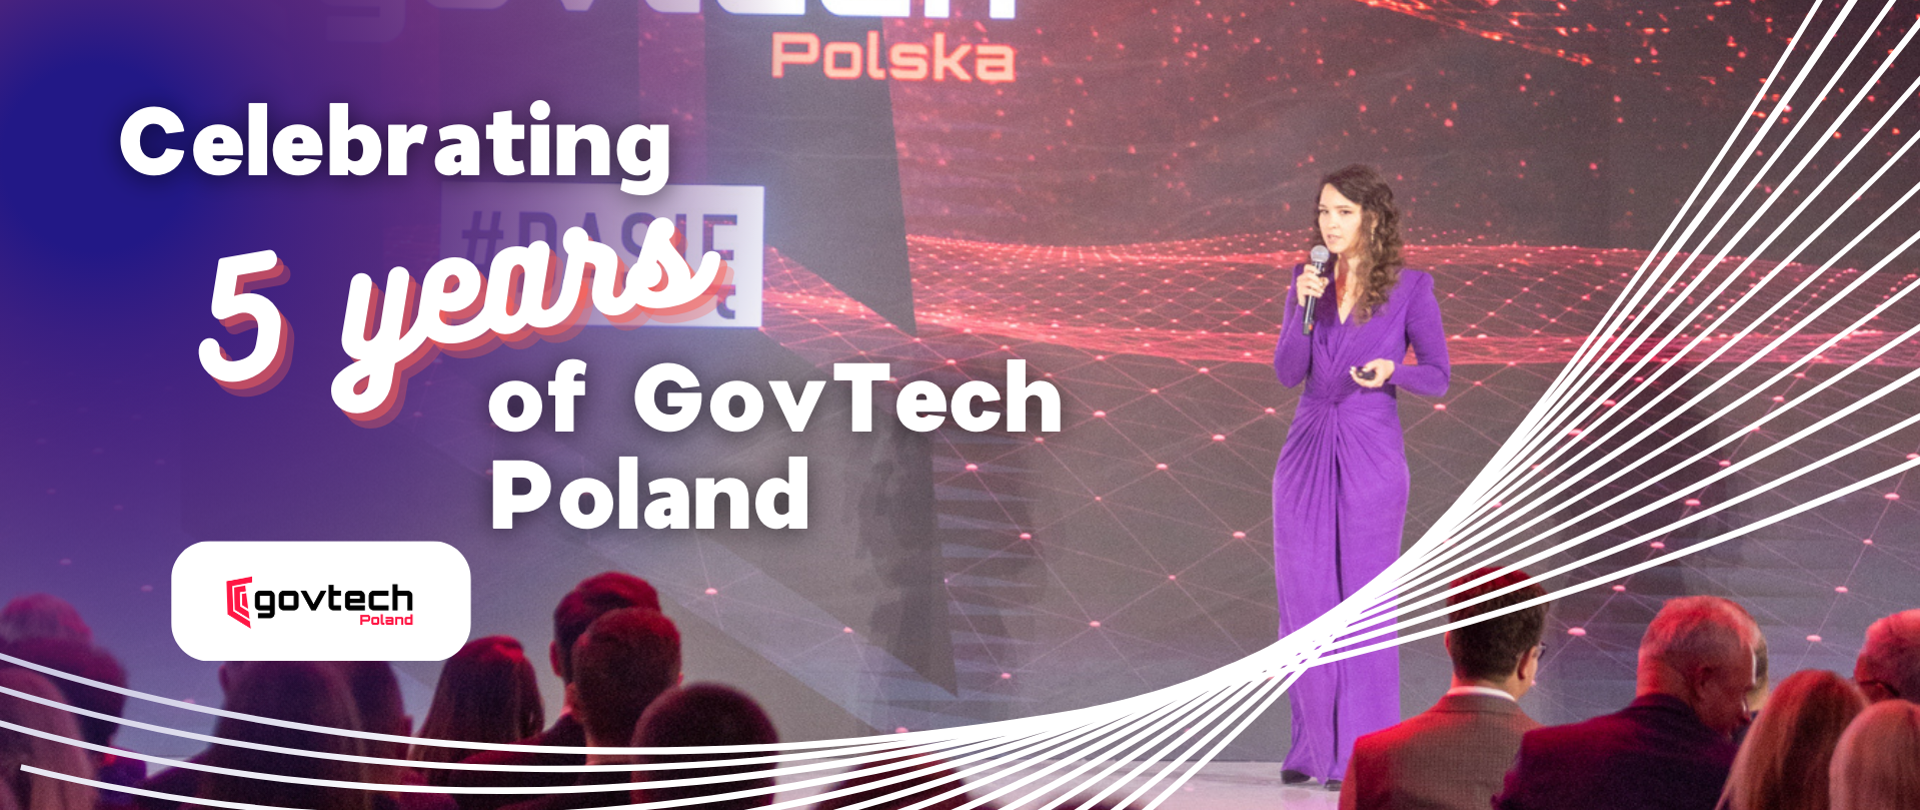 Celebrating 5 years of GovTech Poland